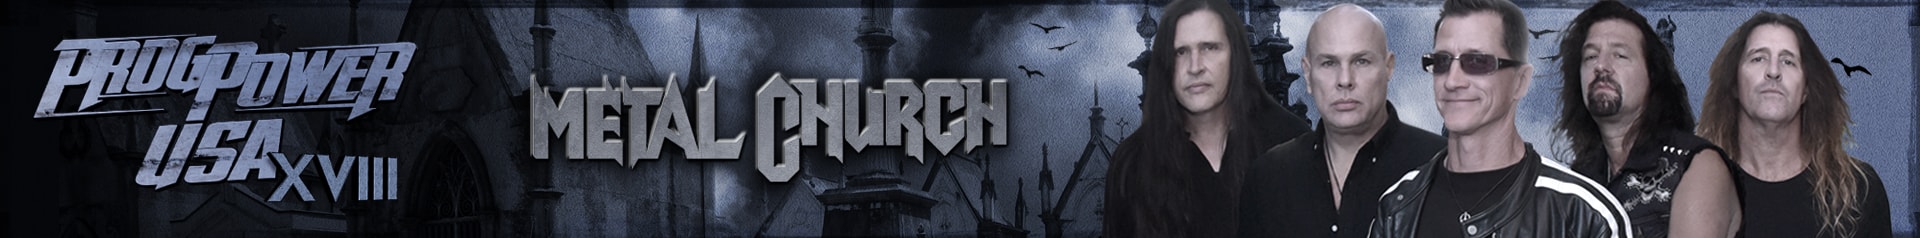 Metal Church Web Banner